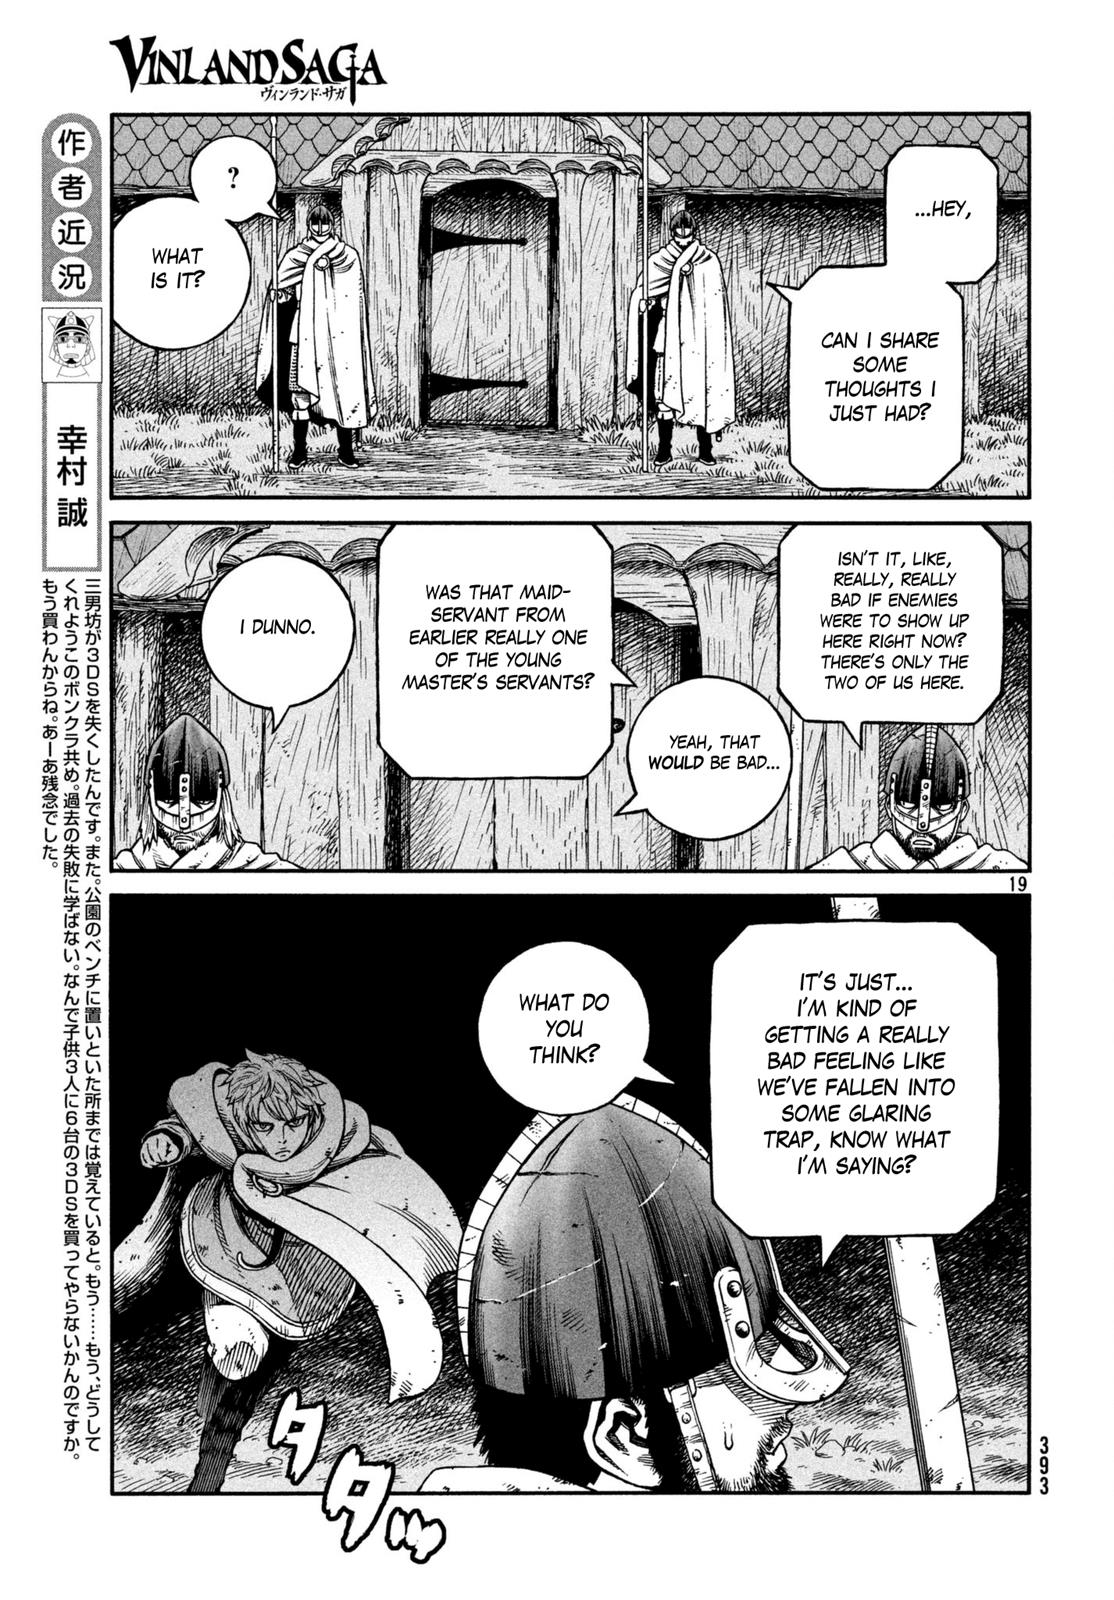 Vinland Saga Manga Manga Chapter - 147 - image 19